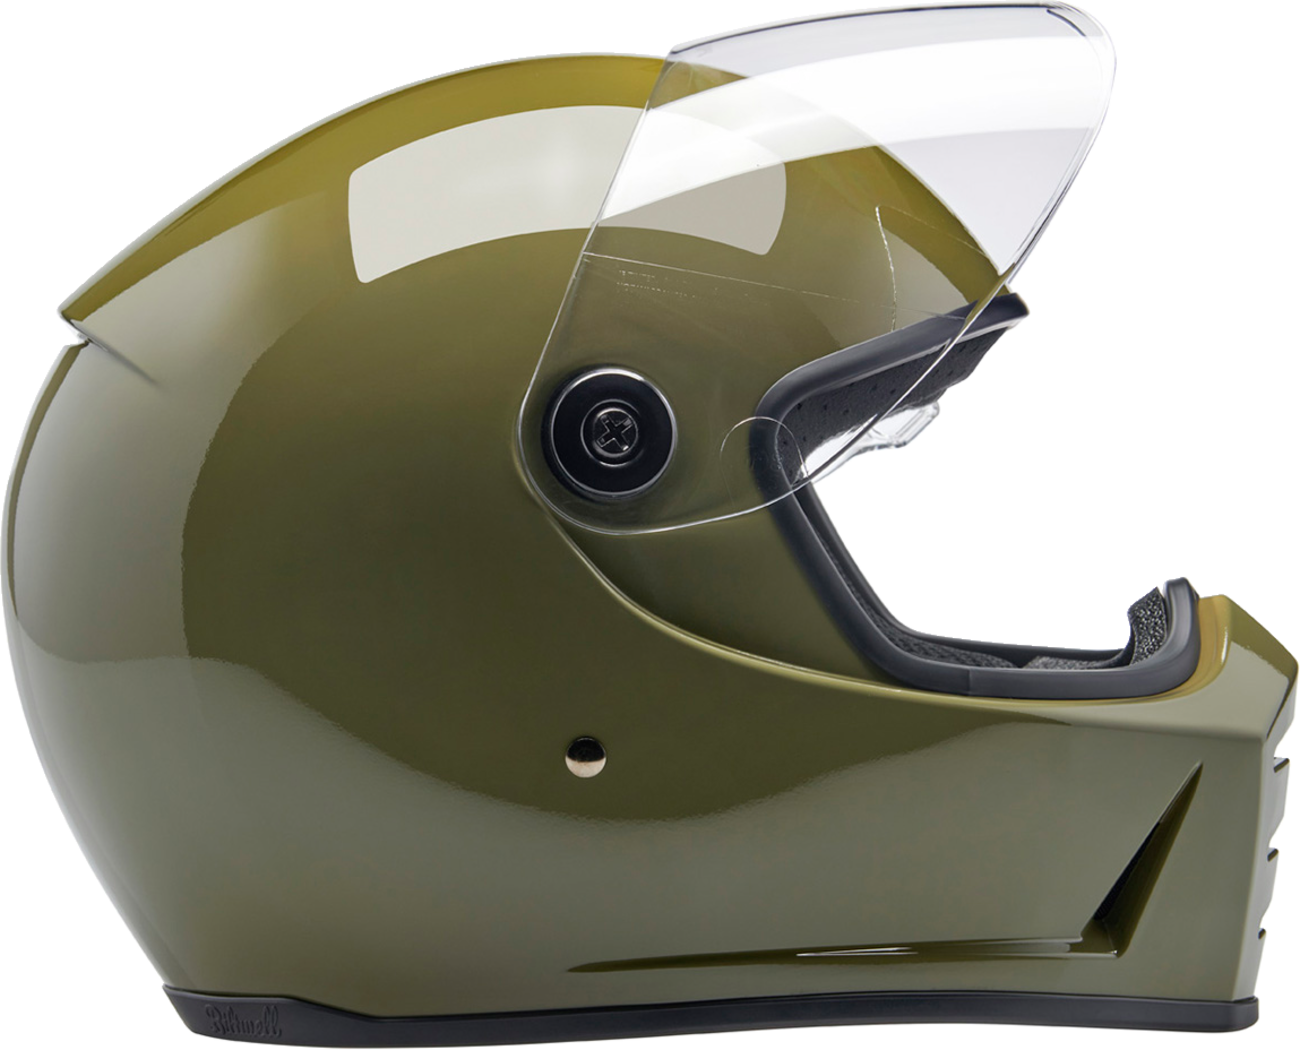 BILTWELL Lane Splitter Helmet - Gloss Olive Green - 2XL 1004-154-506